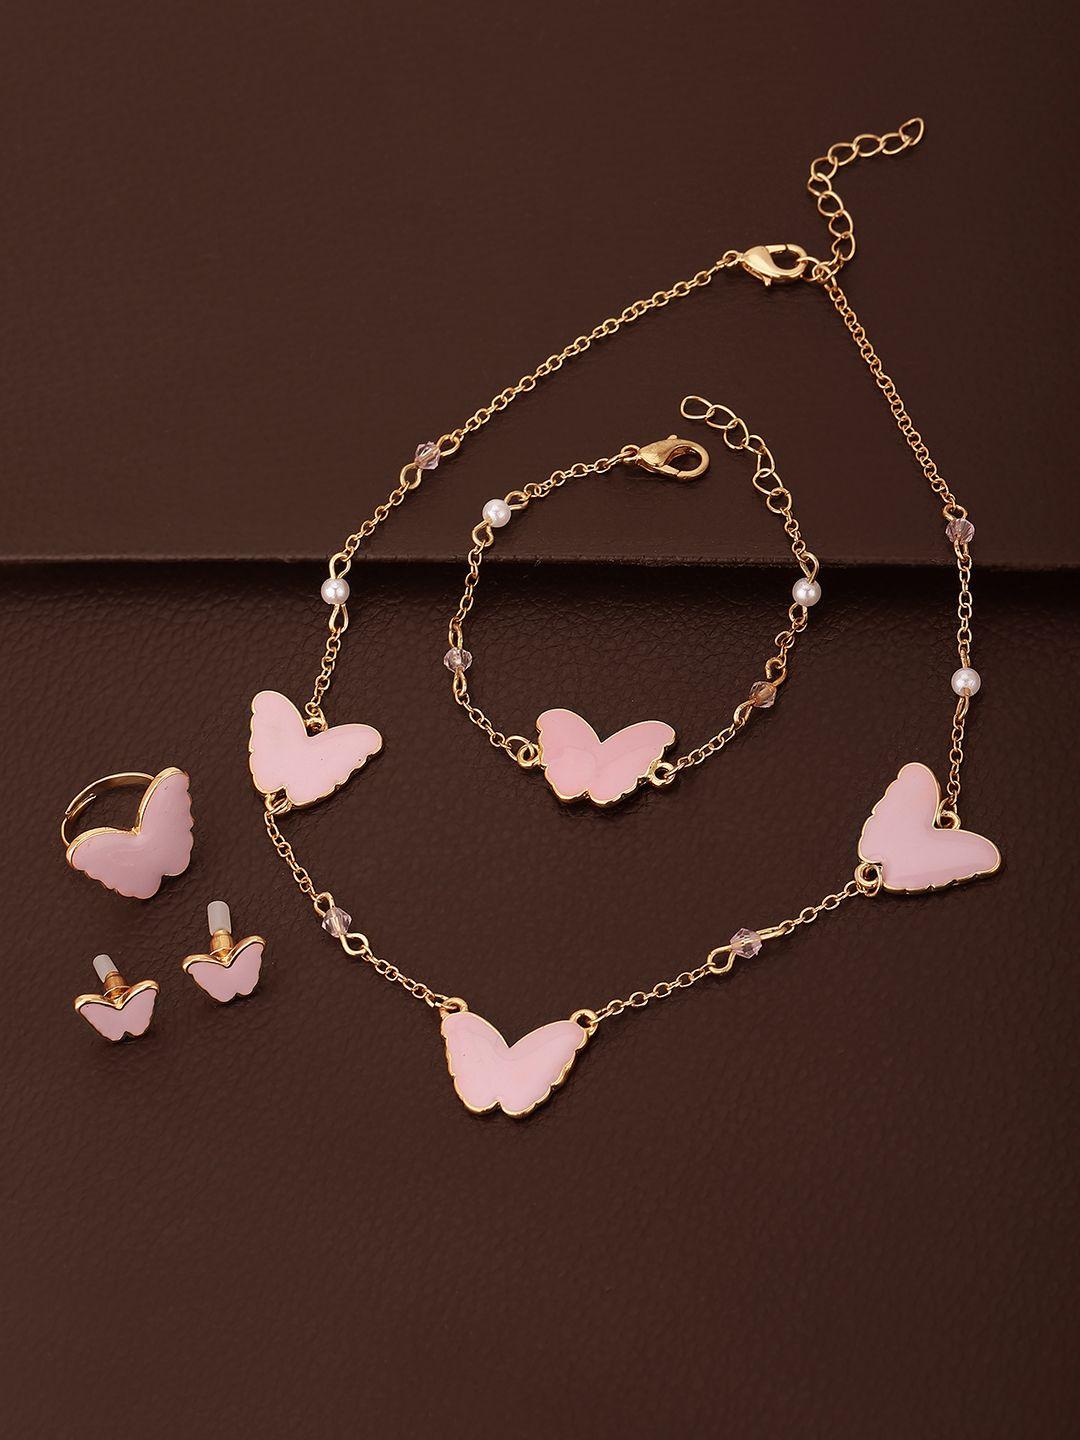 carlton-london-girls-gold-plated-pink-pearl-studded-jewellery-set